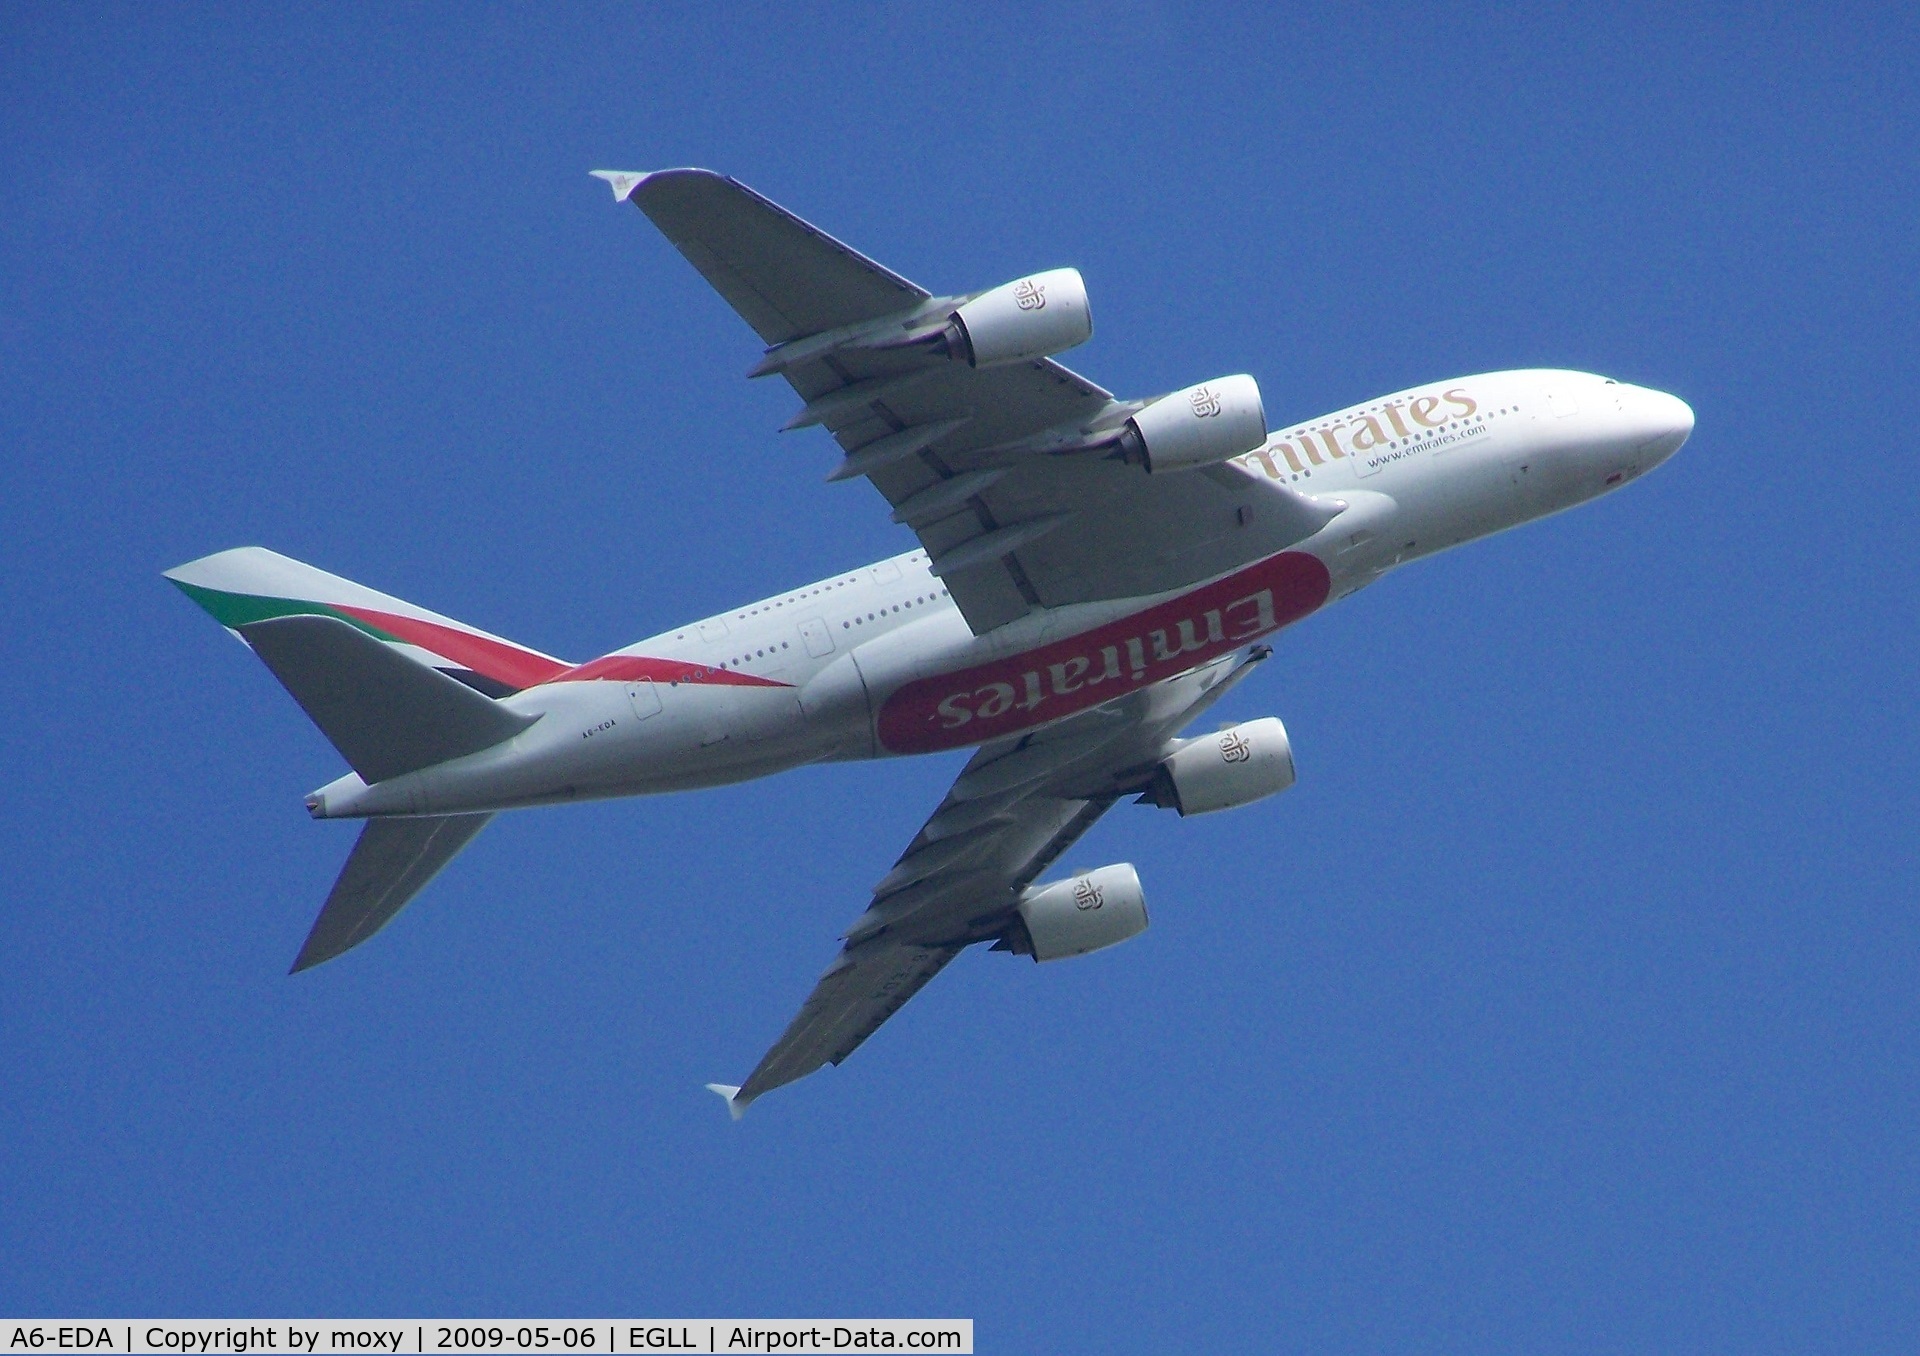 A6-EDA, 2007 Airbus A380-861 C/N 011, Emirates A380 over Runnymede, departing London Heathrow